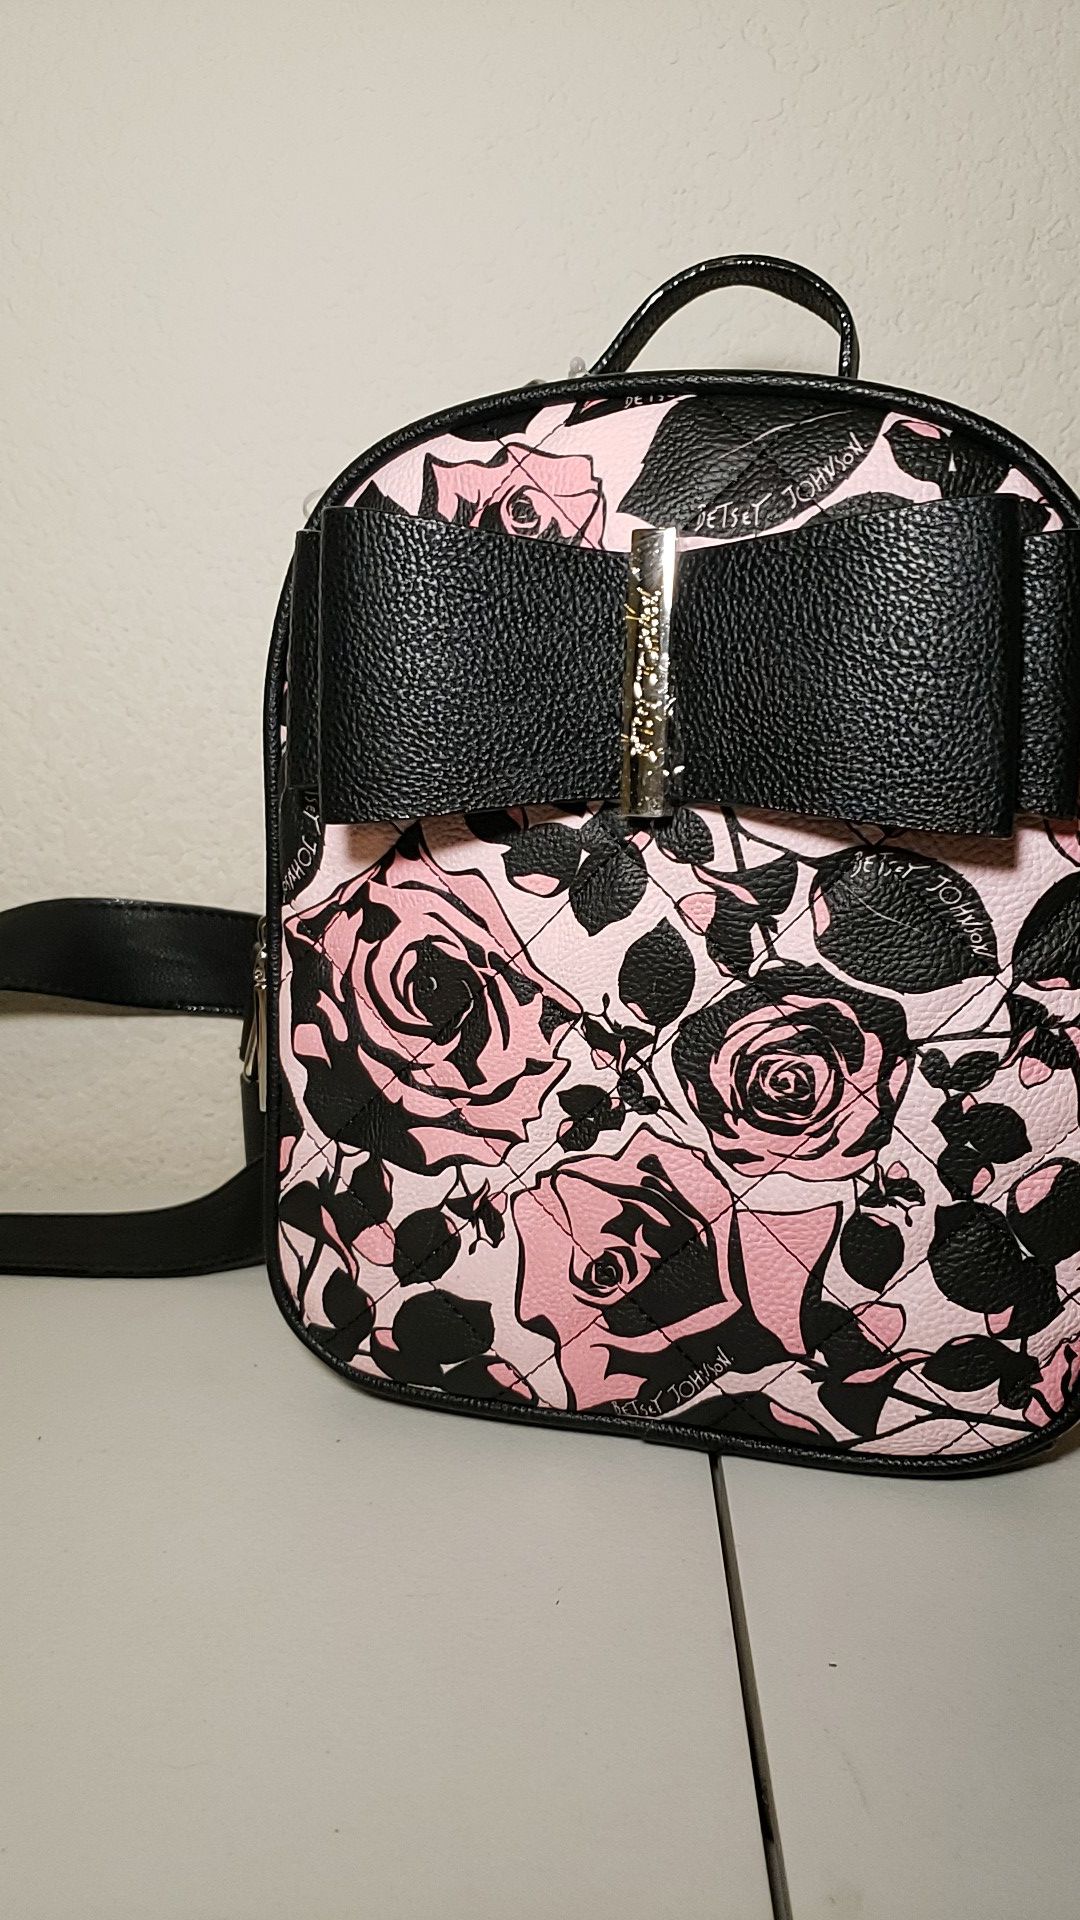 Mini Betsy Johnson backpack purse.